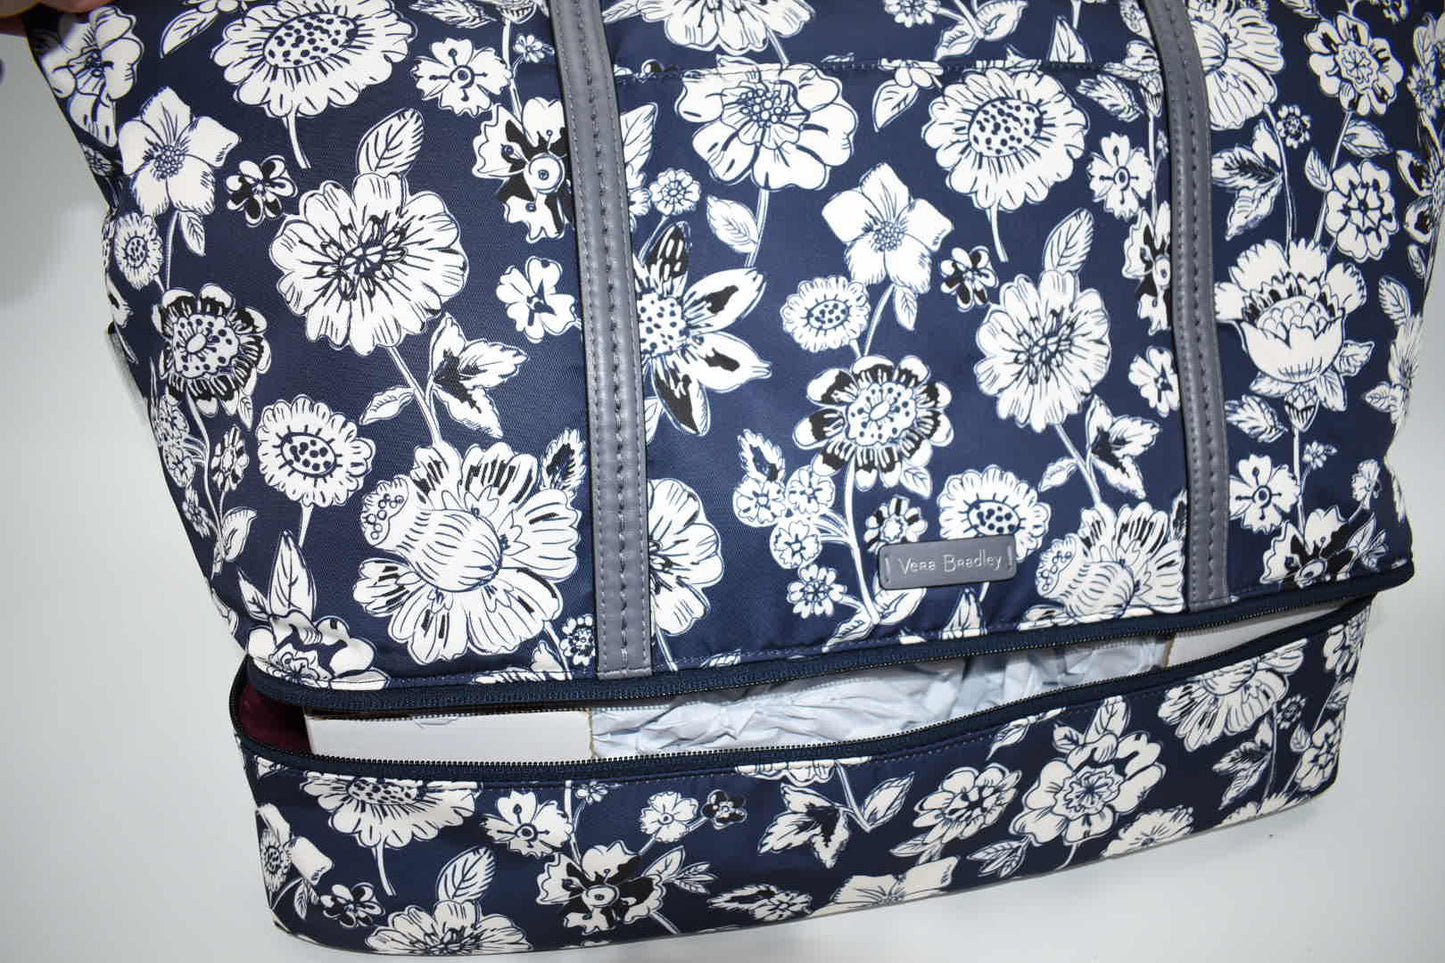 Vera Bradley Midtown Travel Bag in "Midnight Floral" Pattern